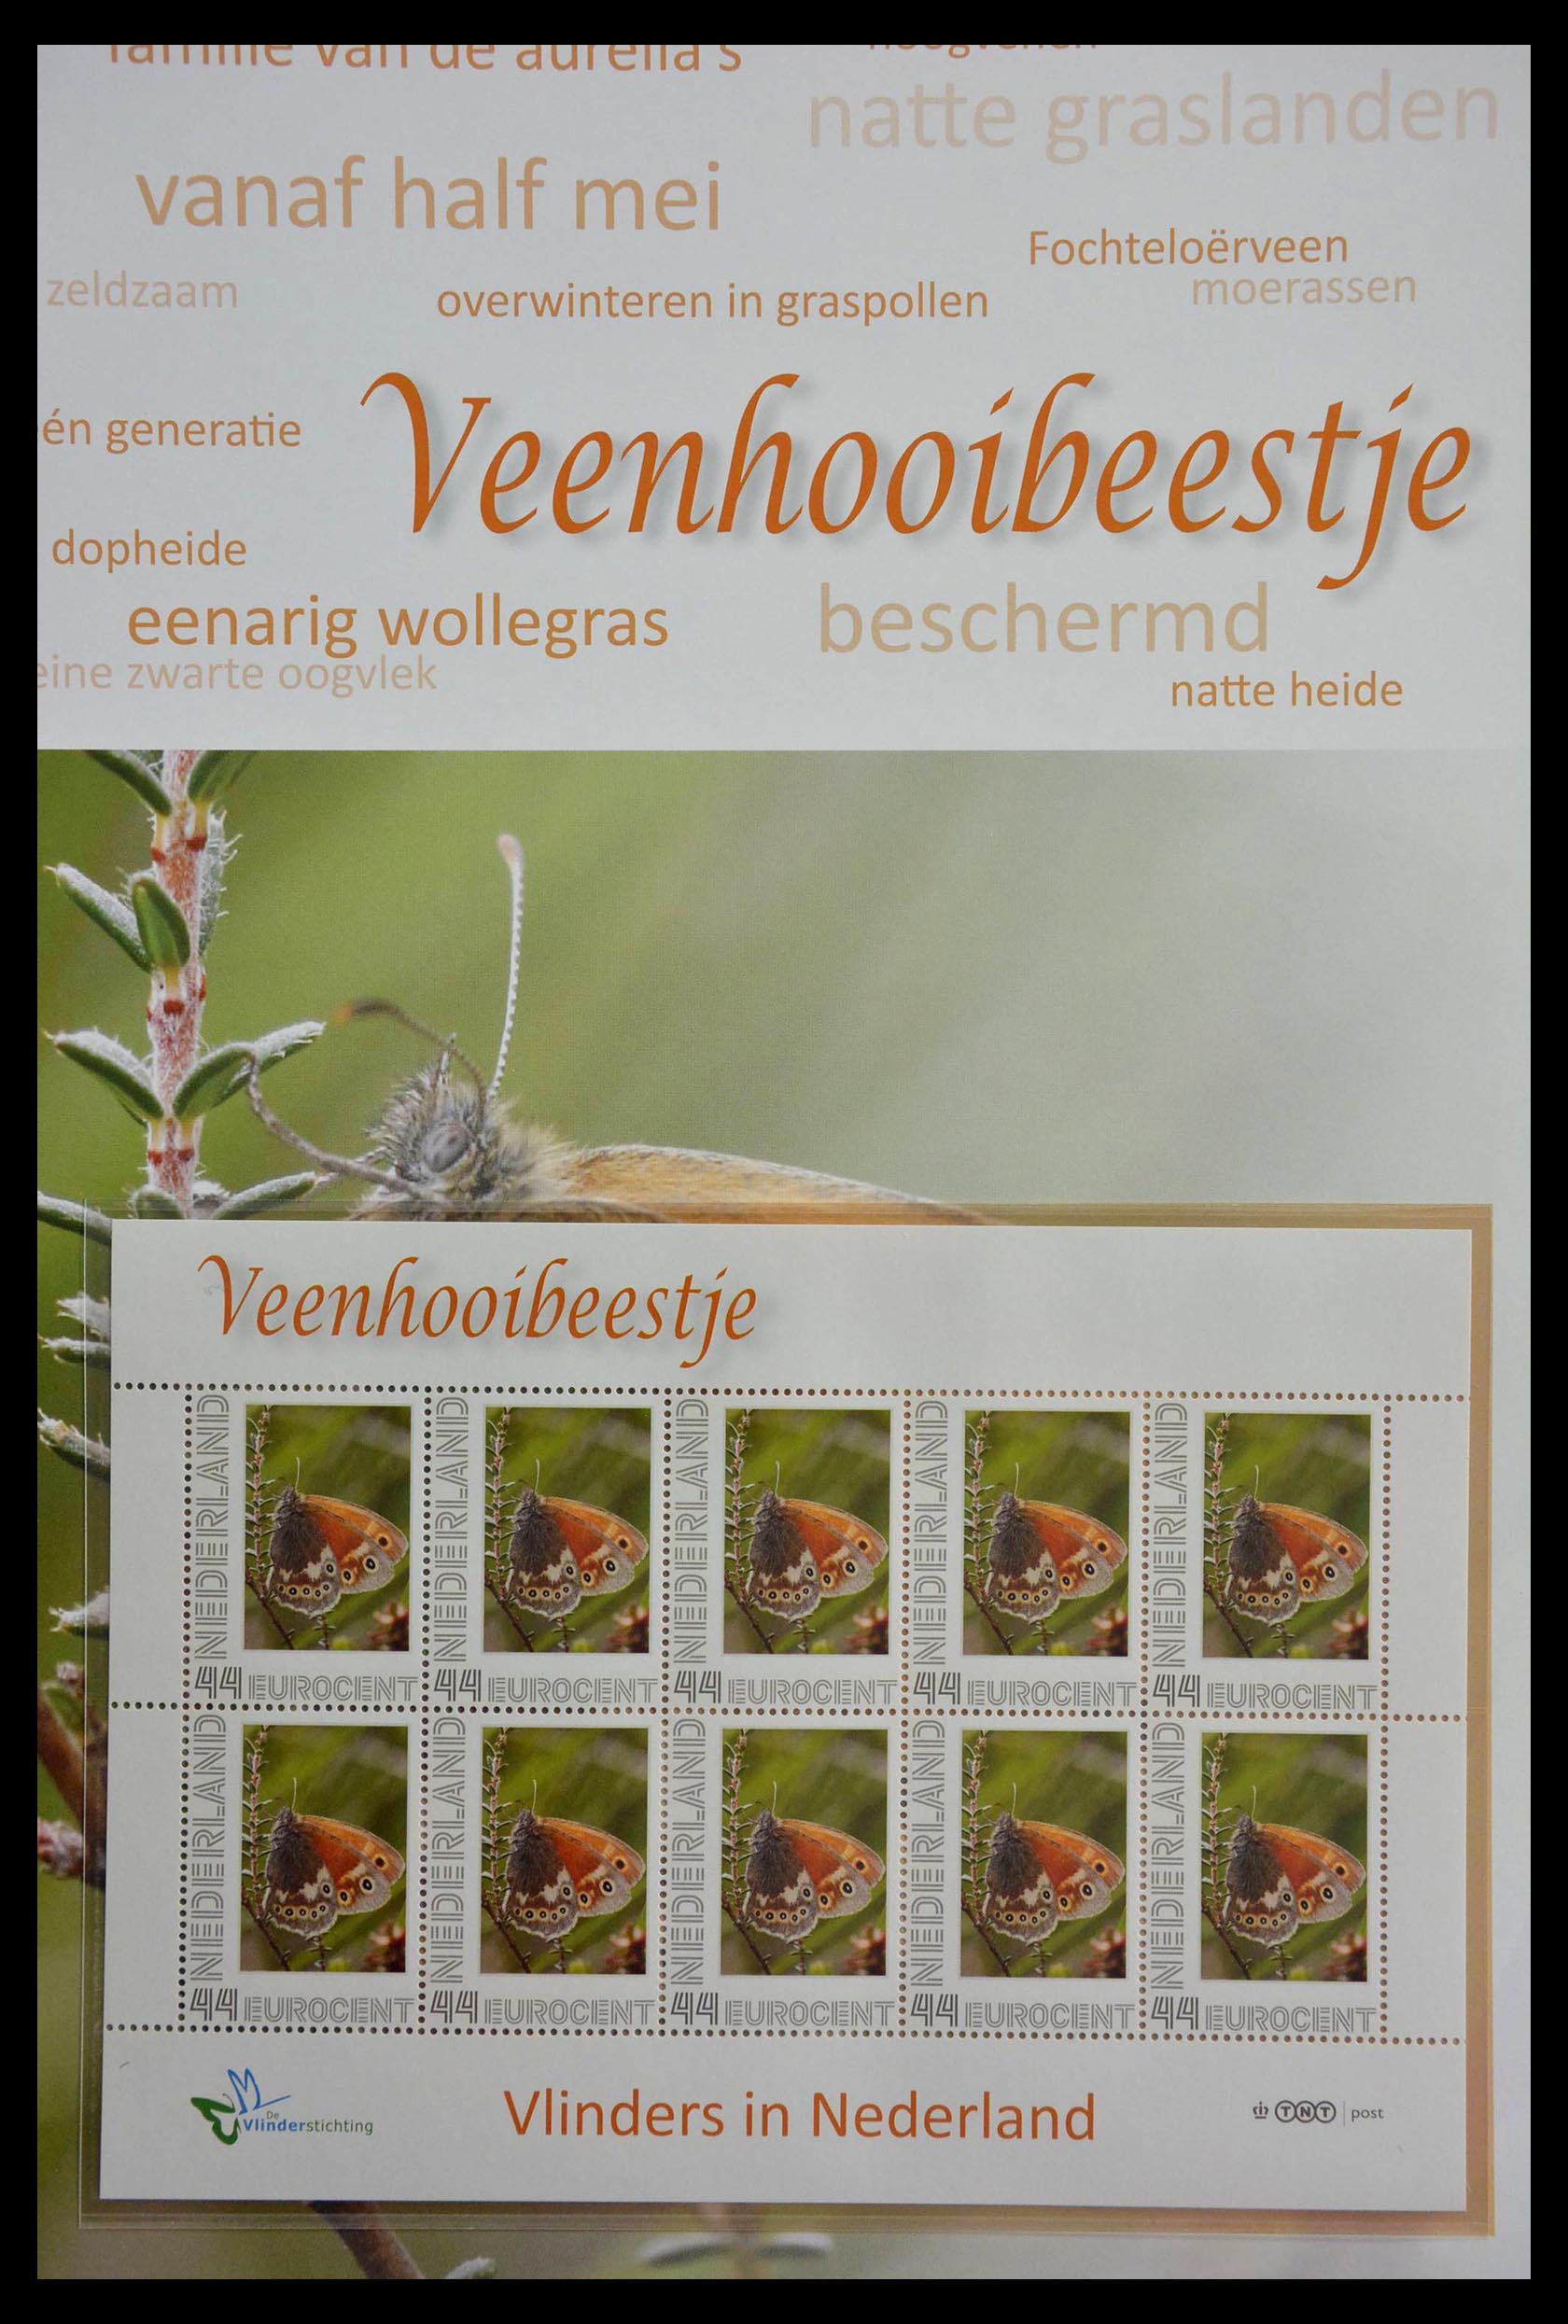 13105 012 - 13105 Butterflies in the Netherlands.